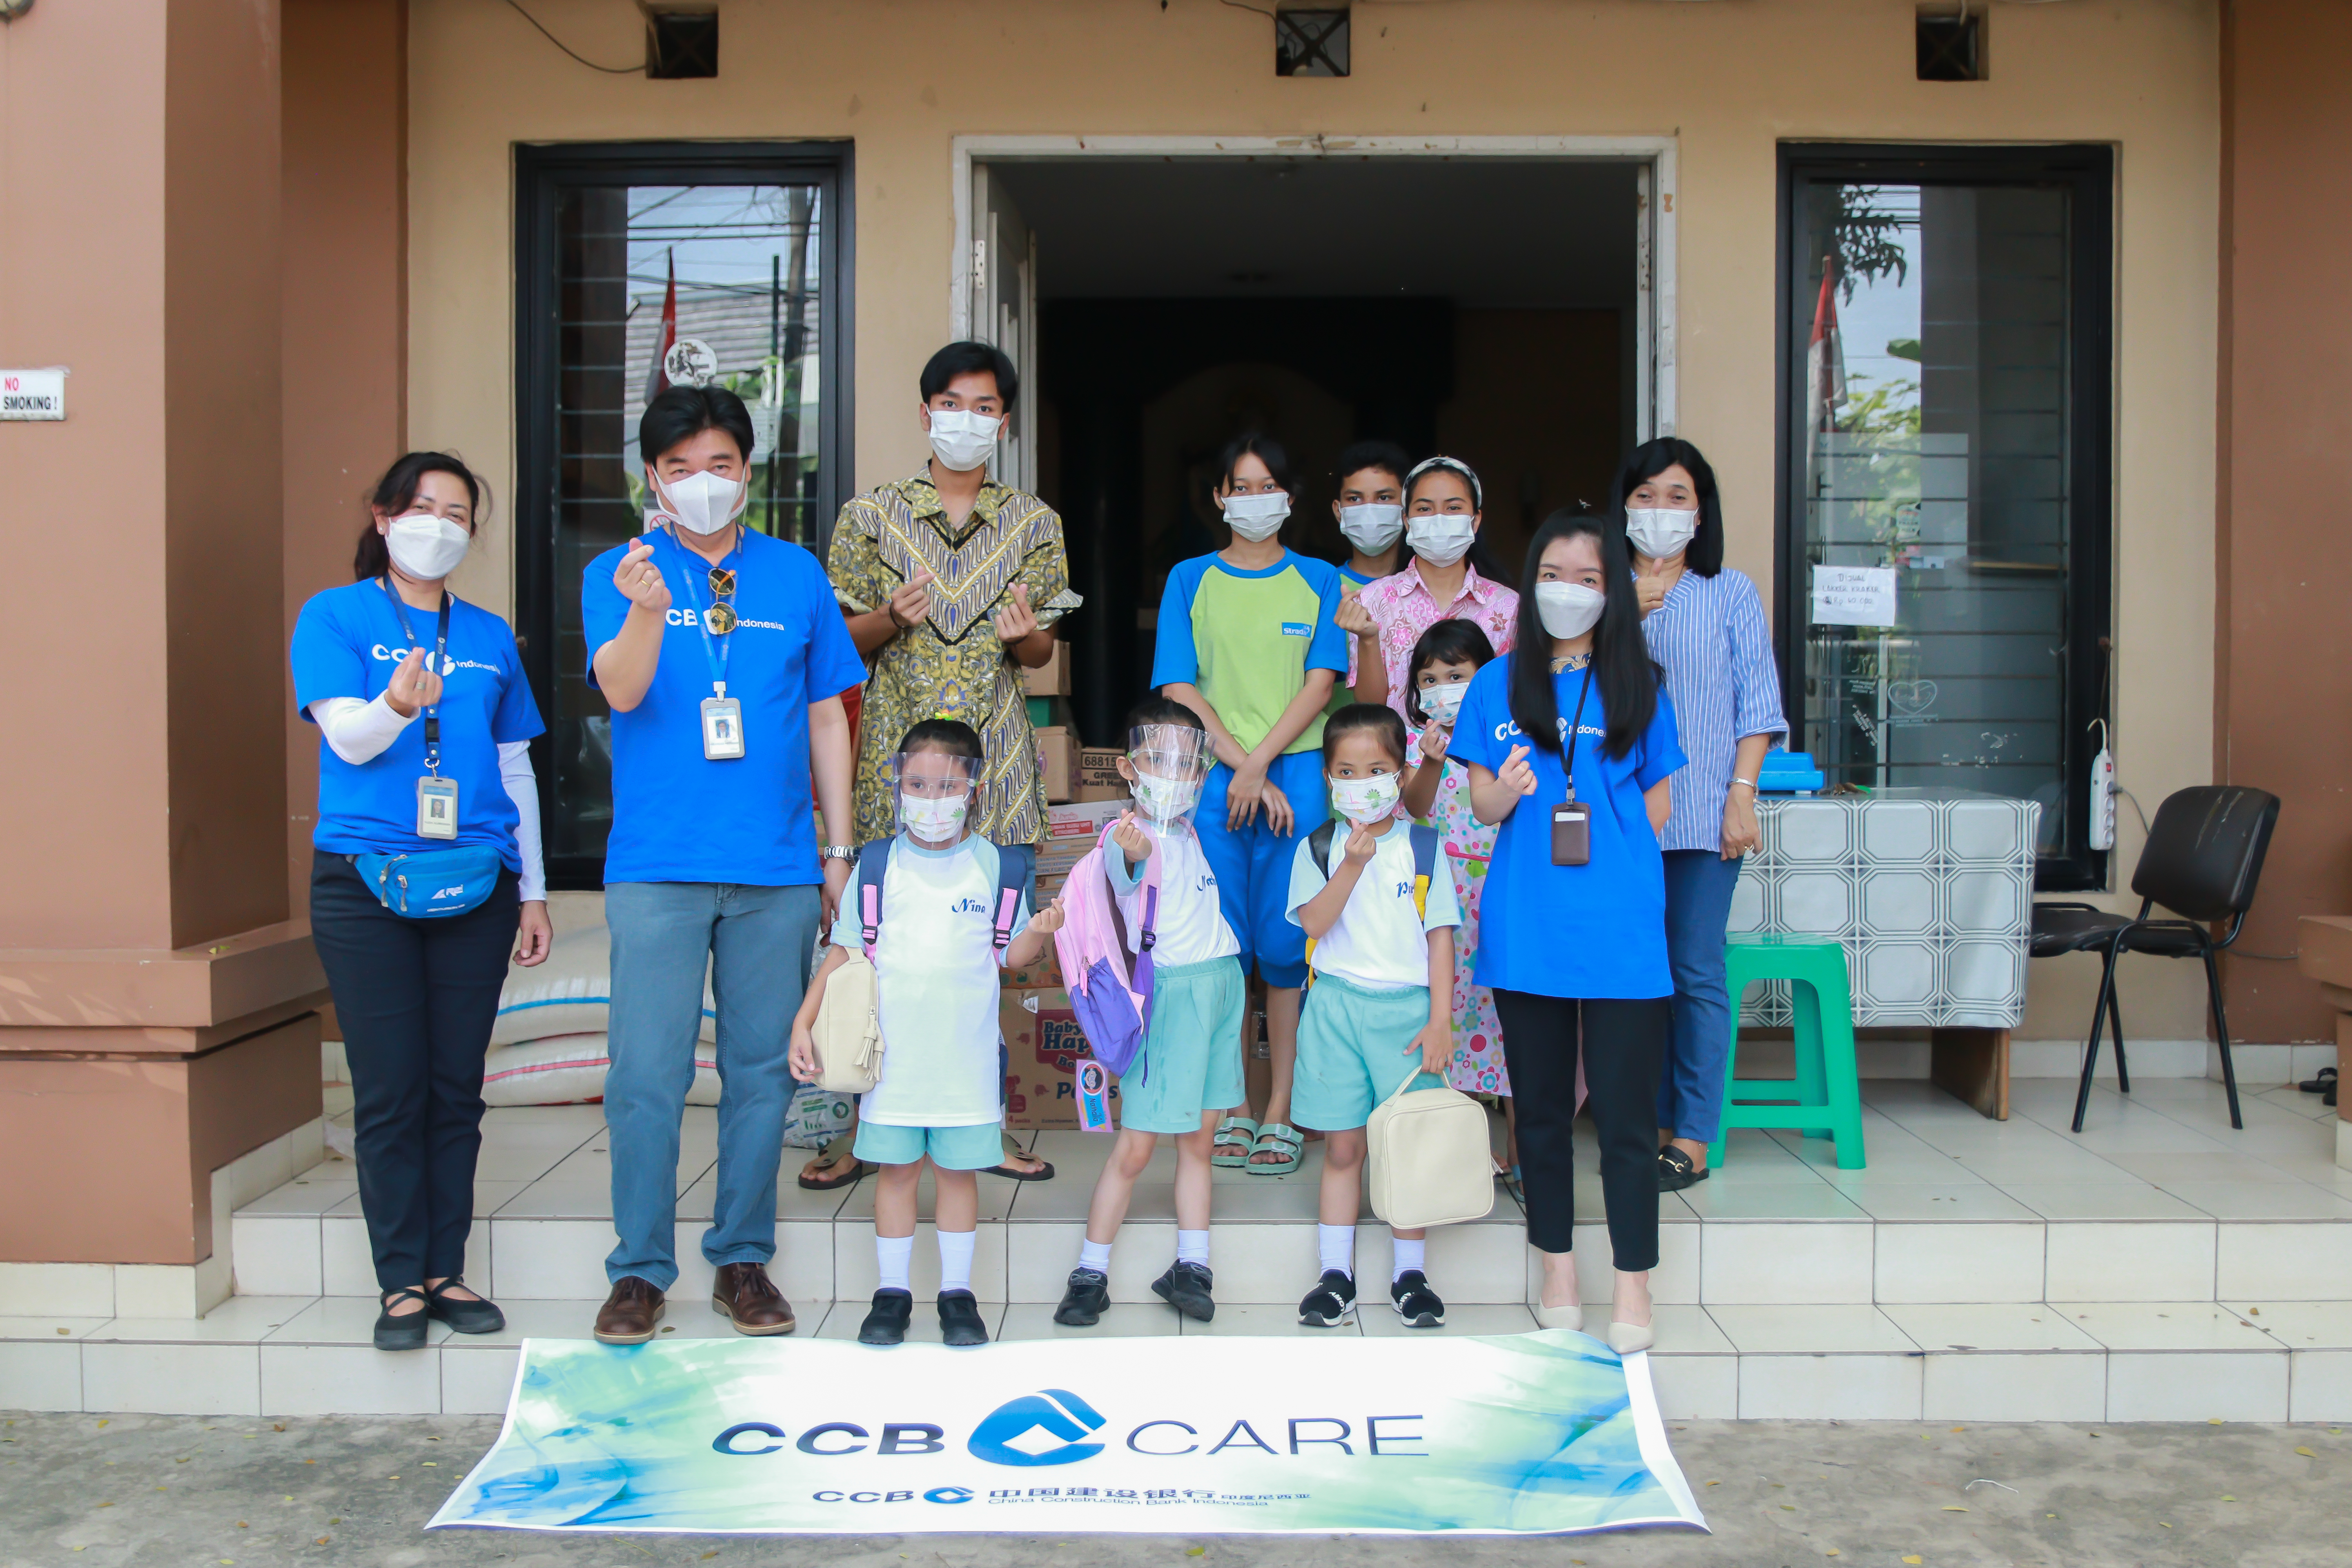 CCBI Care - Orphanage of Mekar Lestari, Tangerang